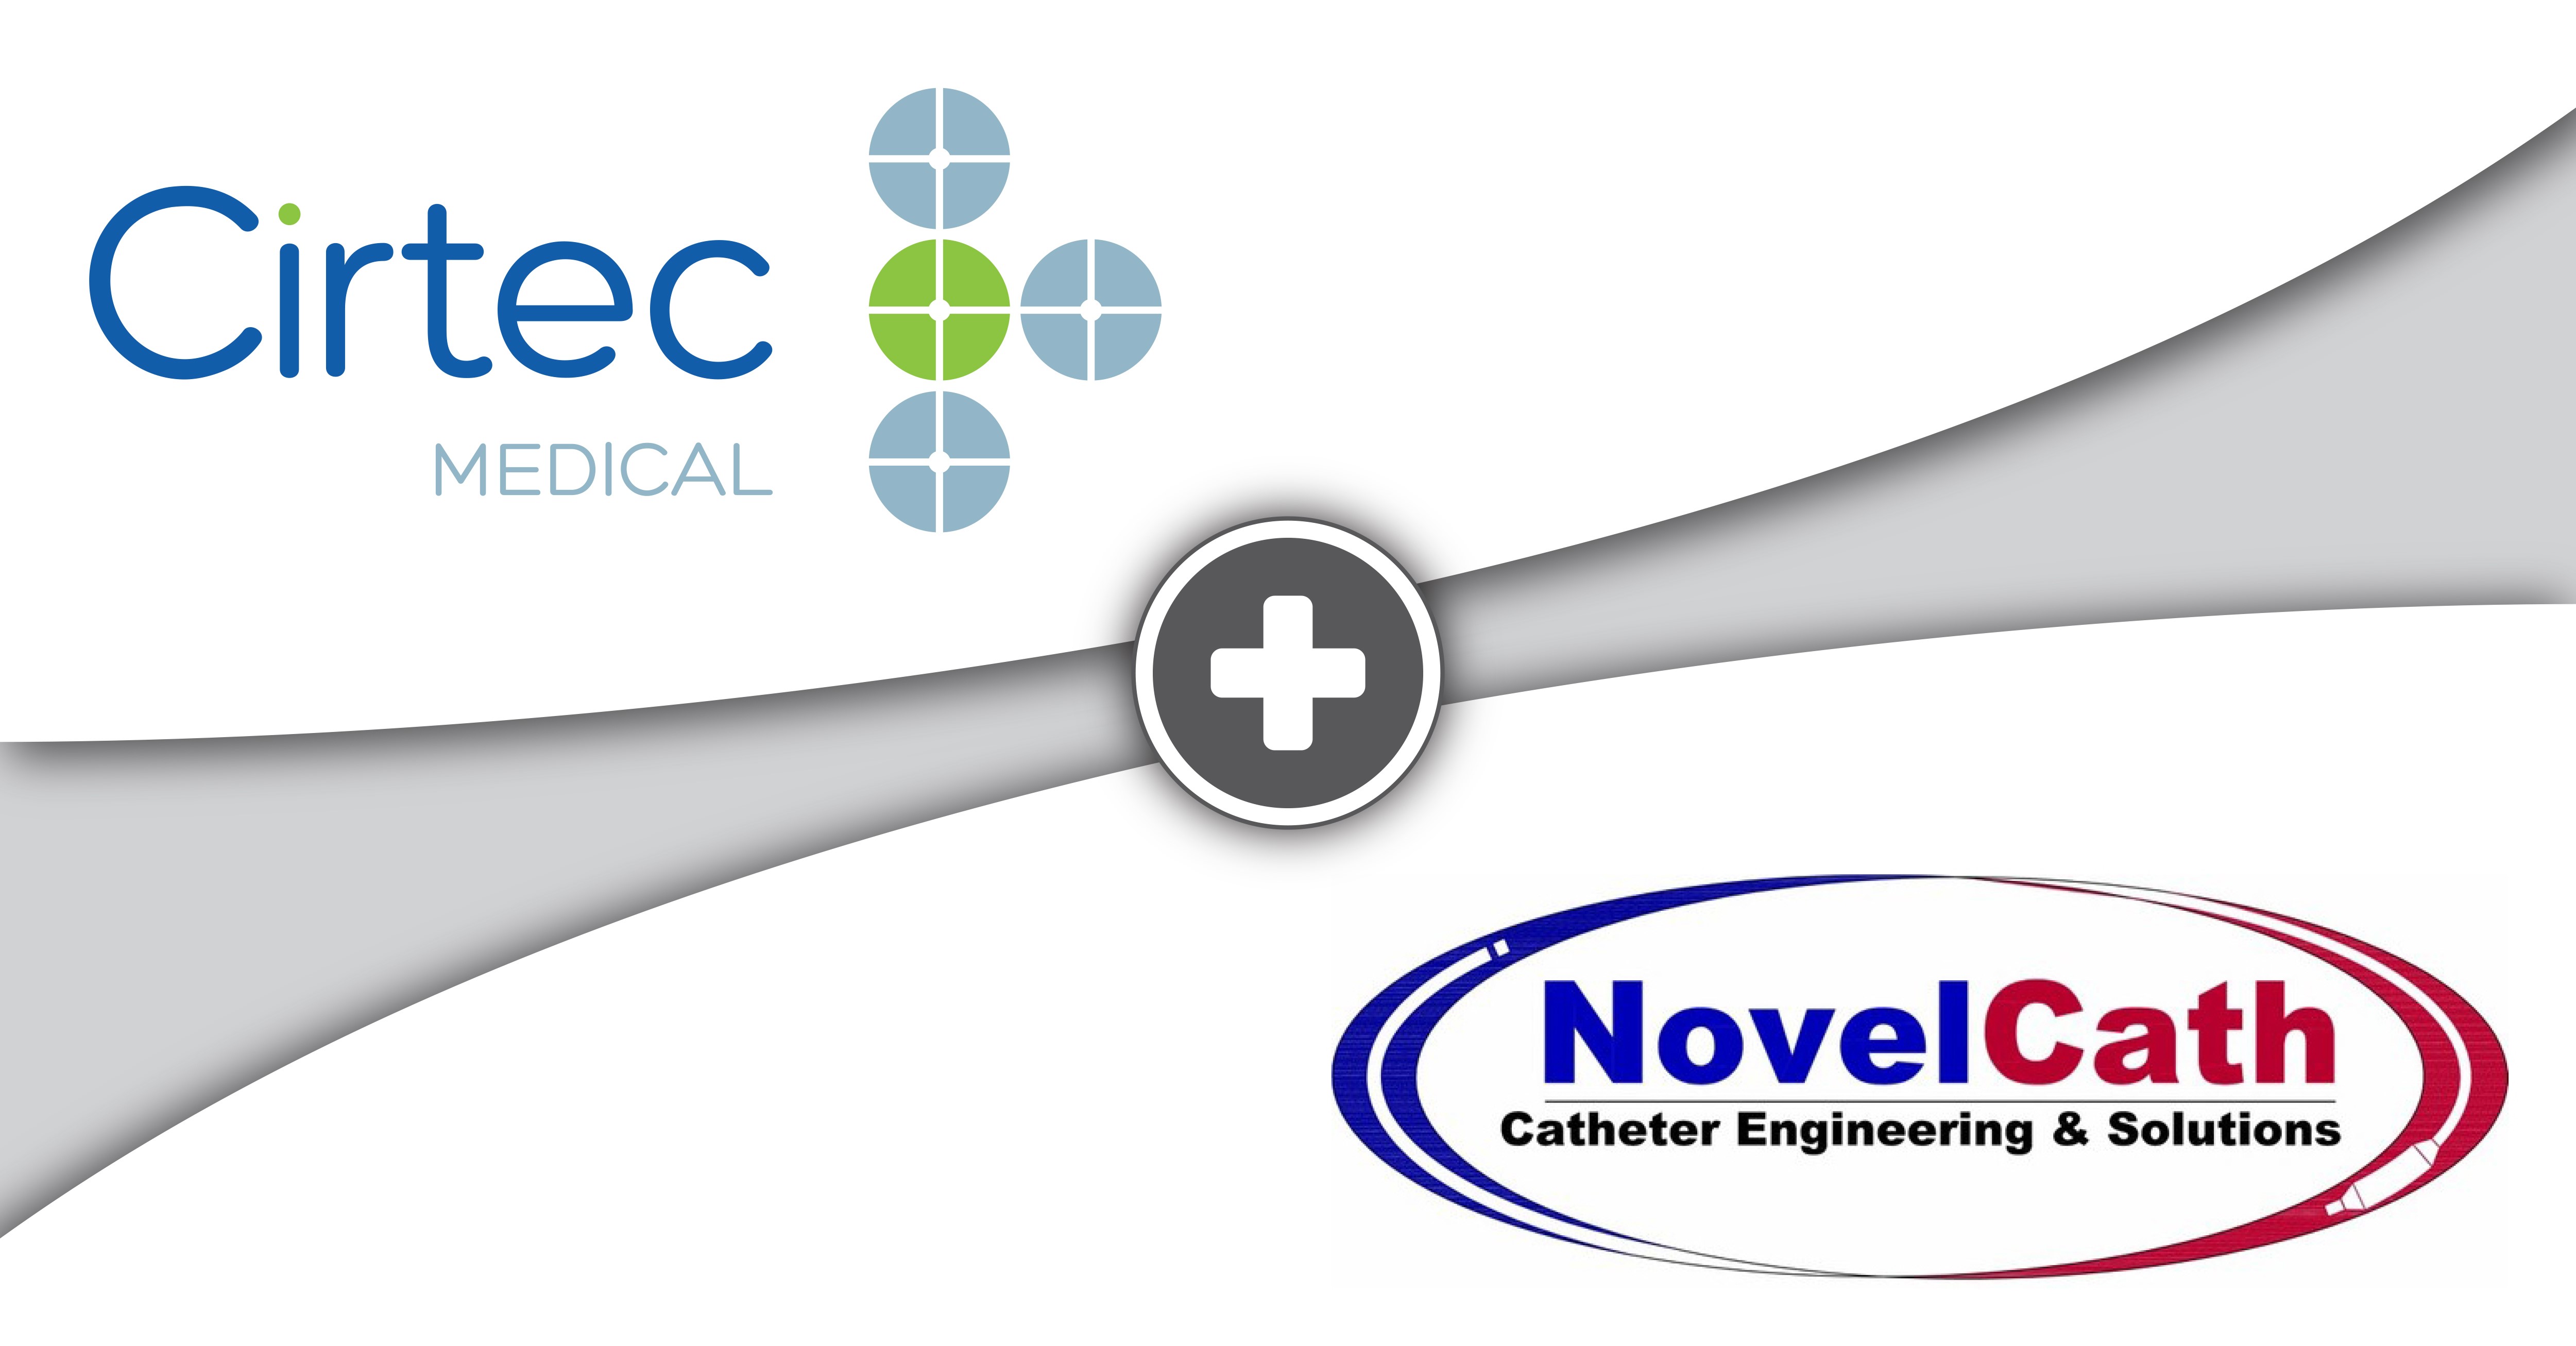 Cirtec Medical Announces Acquisition of NovelCath